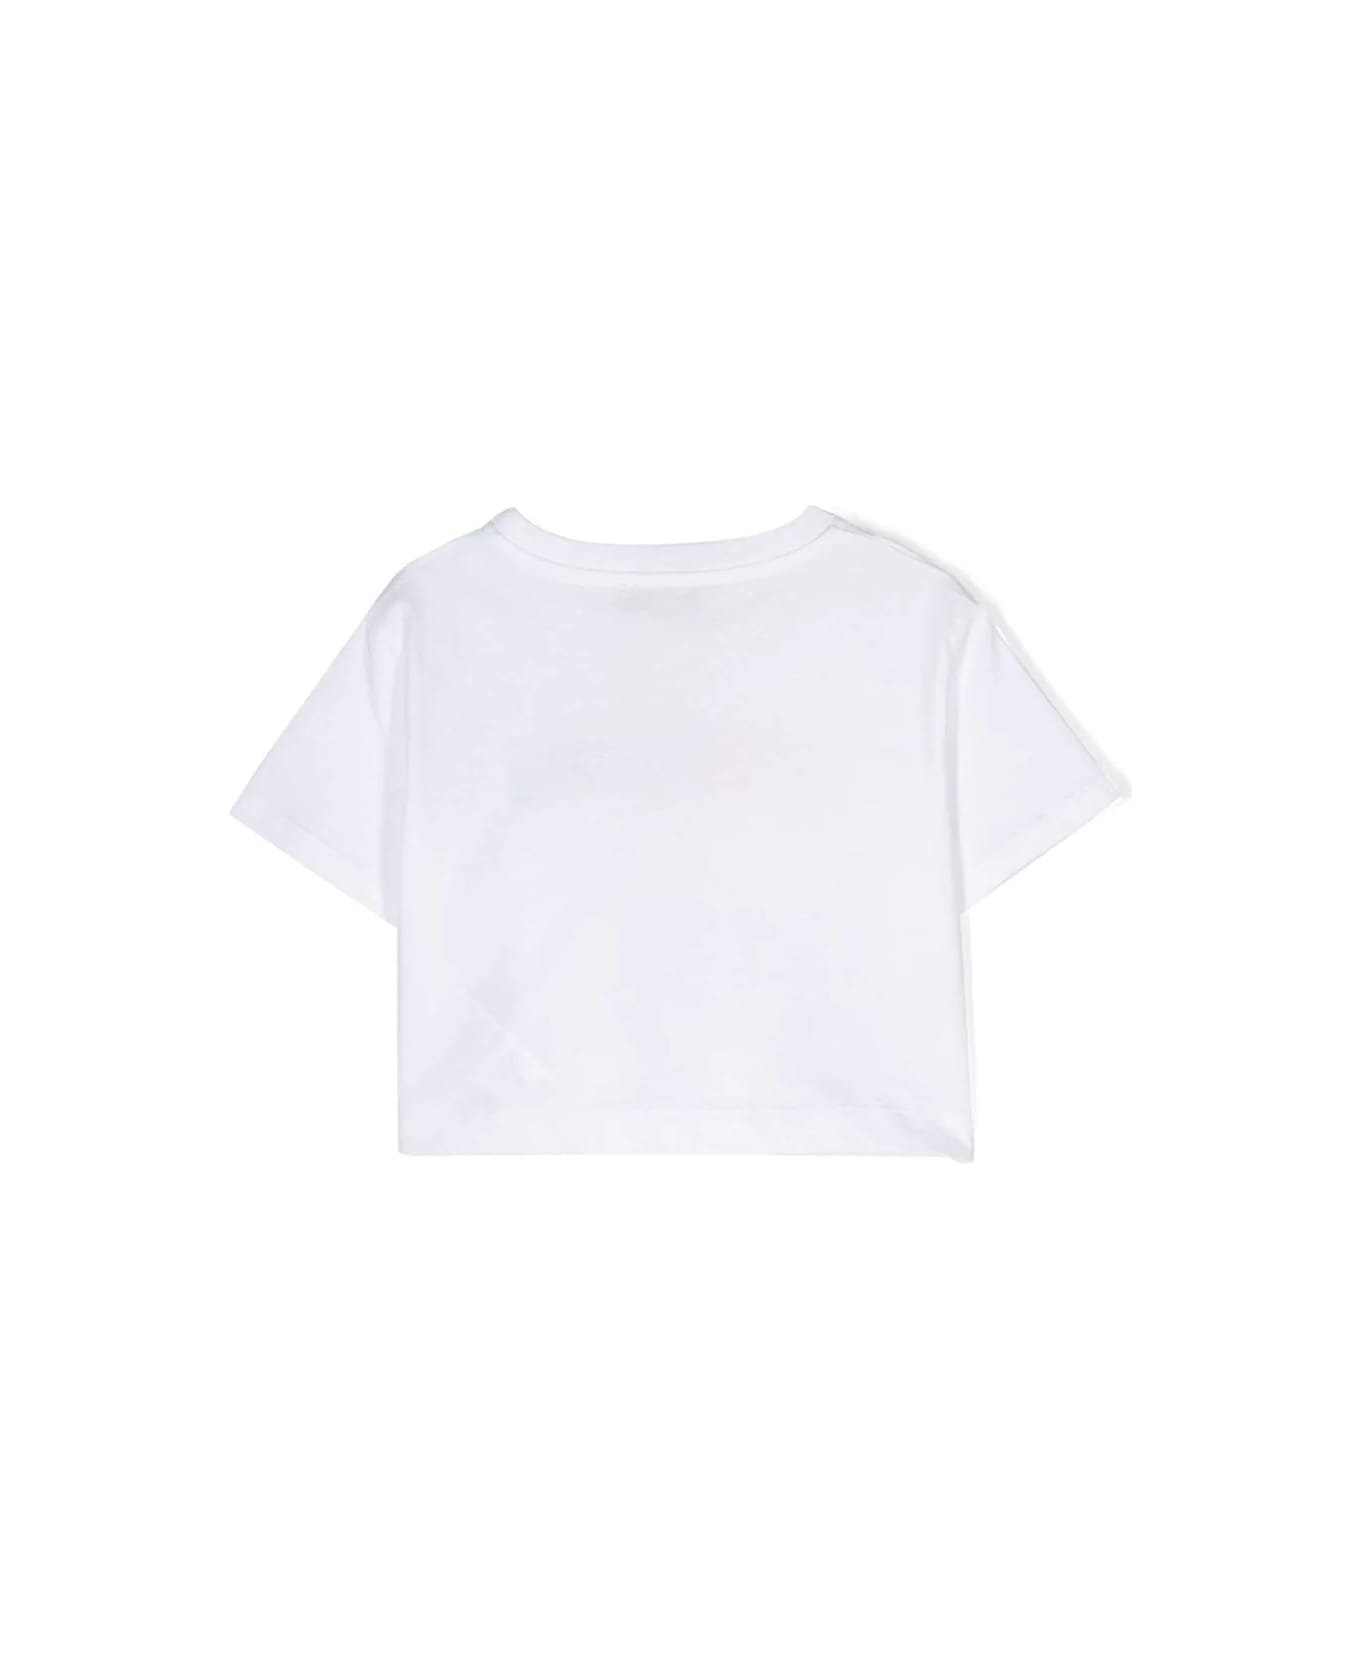 Missoni Kids T-shirt Con Logo - White